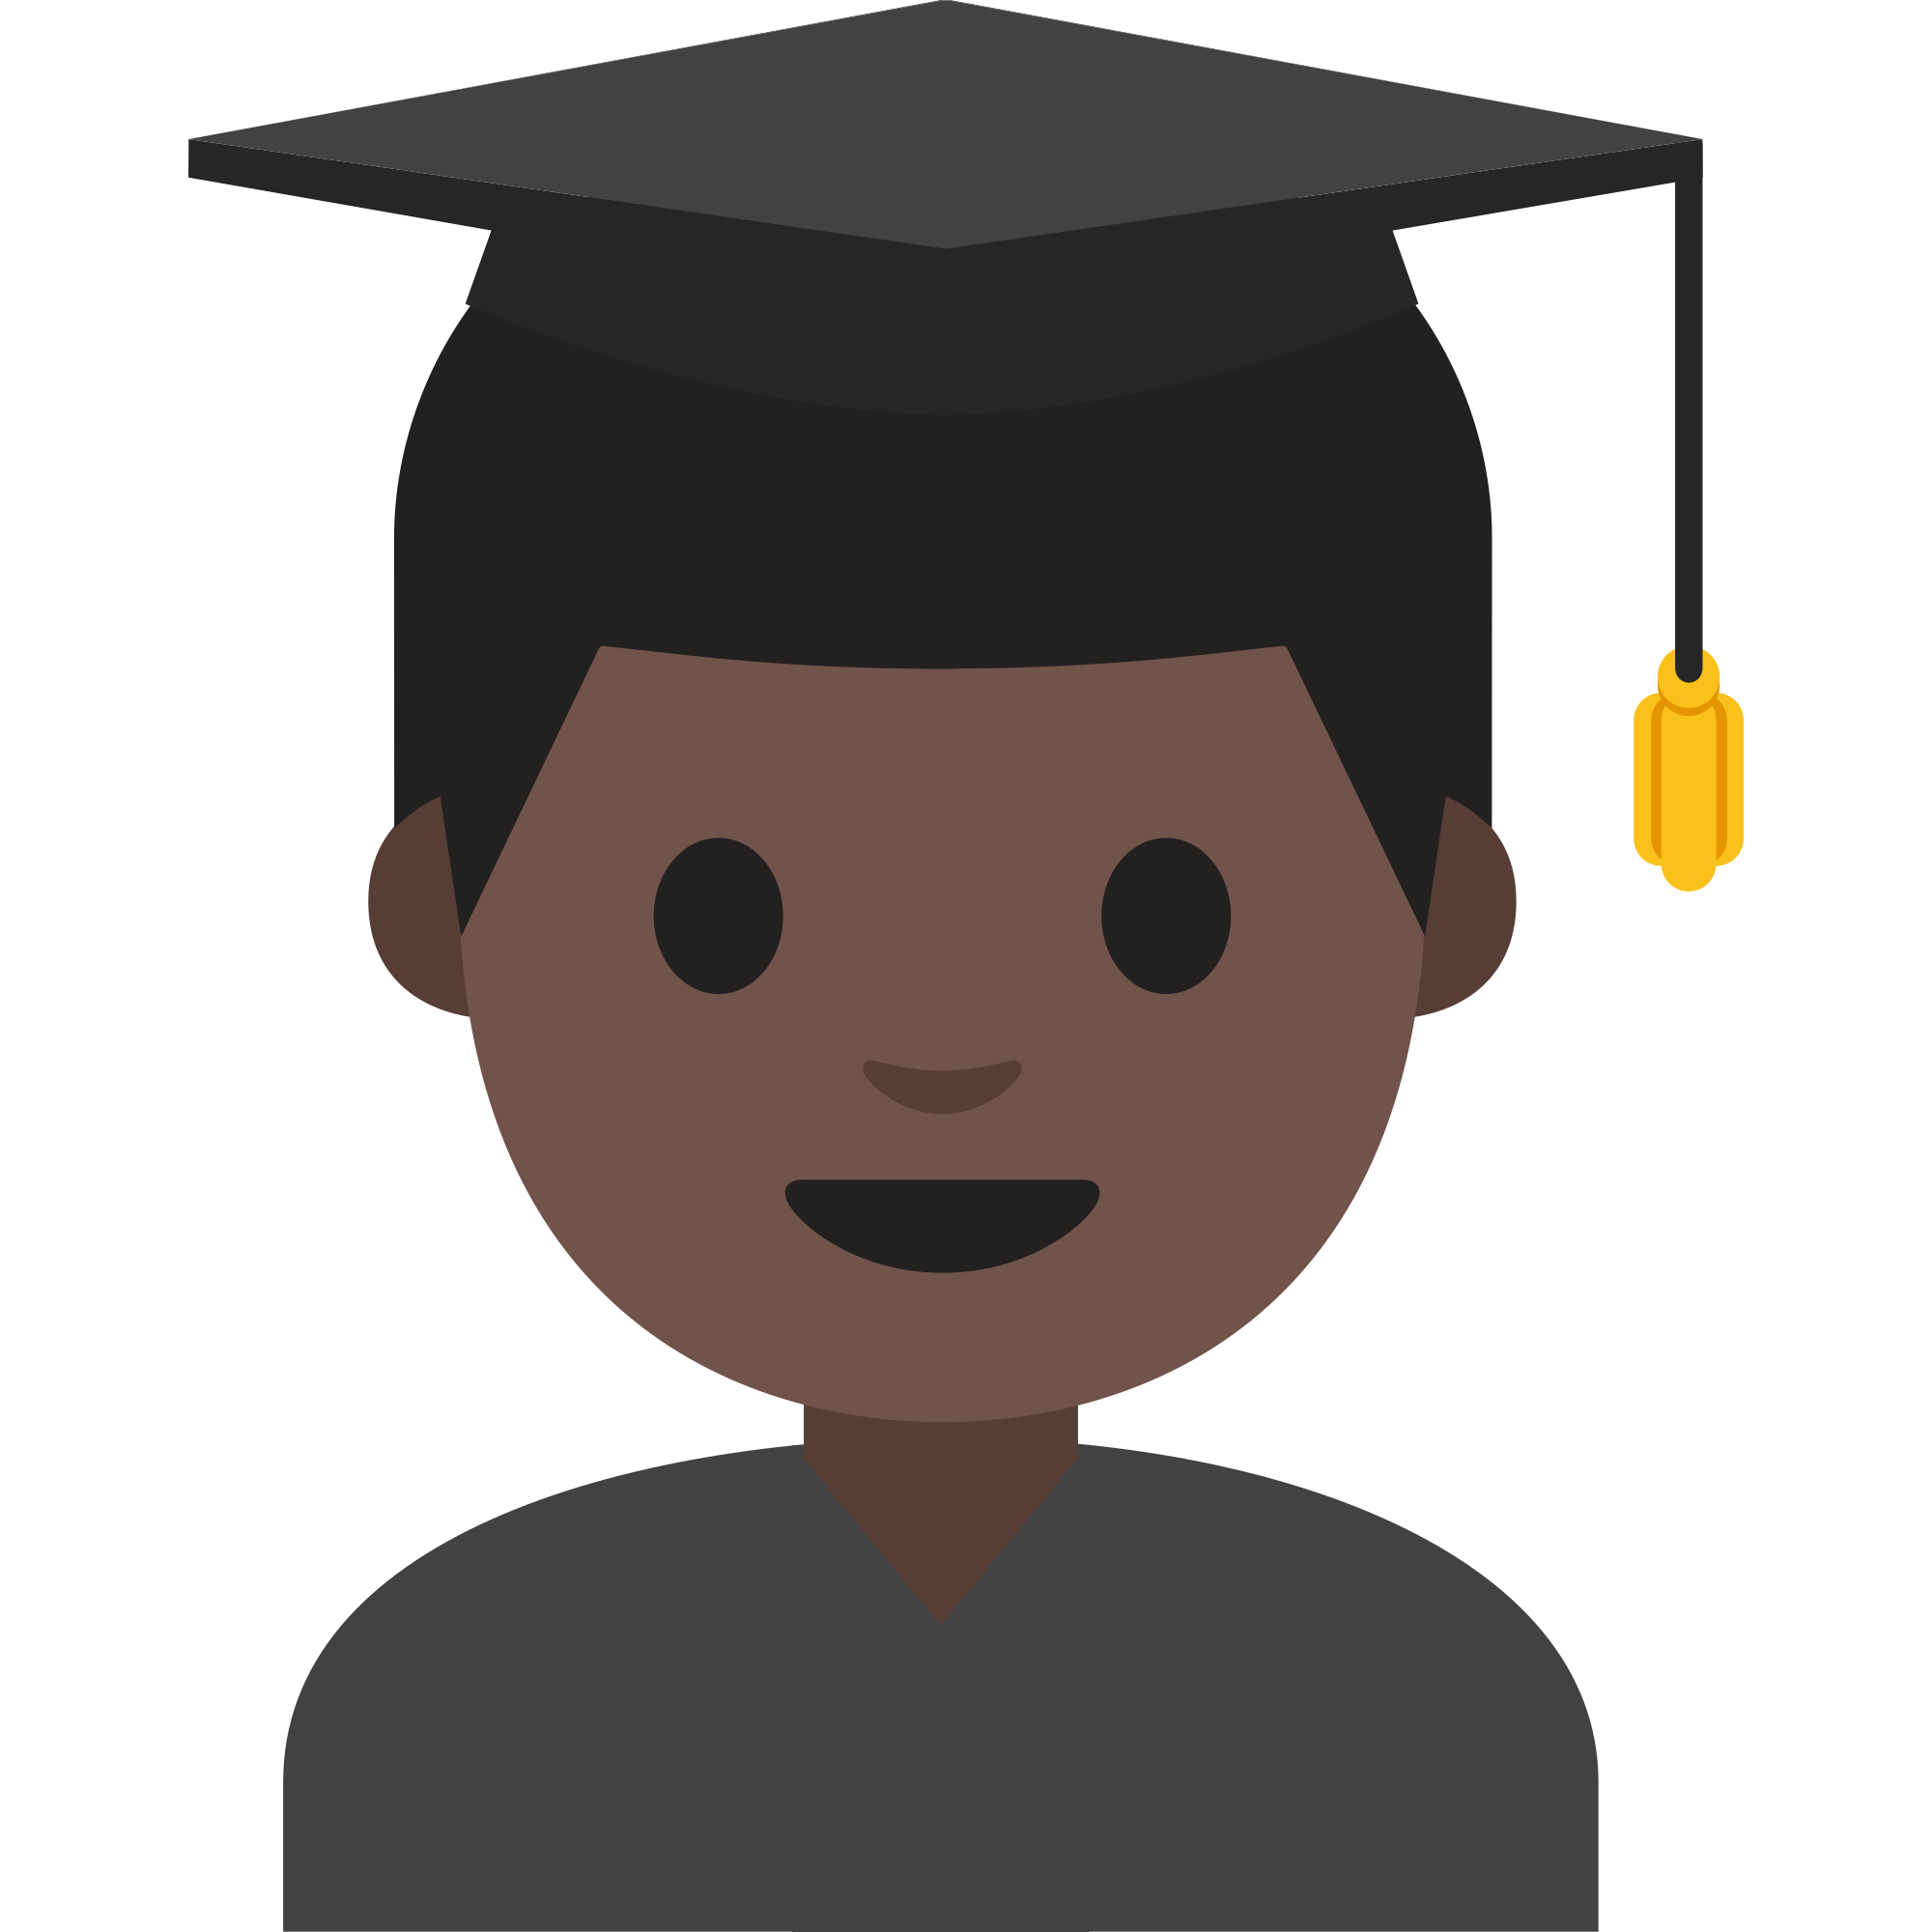 emoji clipart graduation